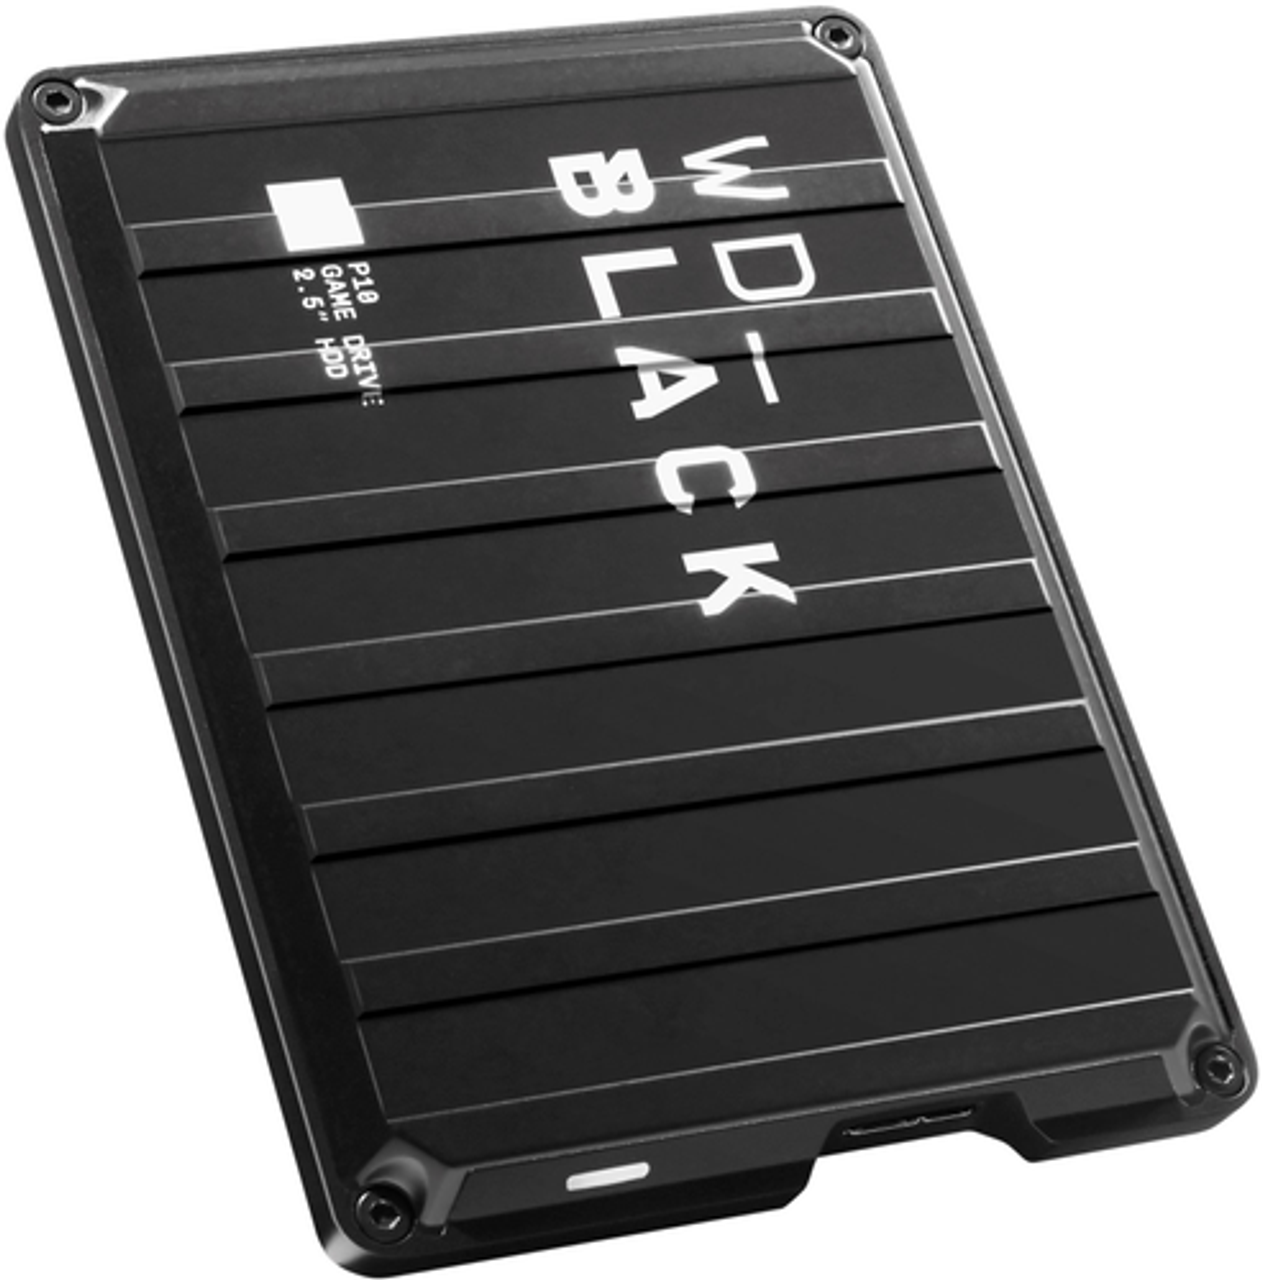 WD - BLACK P10 2TB External USB 3.2 Gen 1 Portable Hard Drive - Black